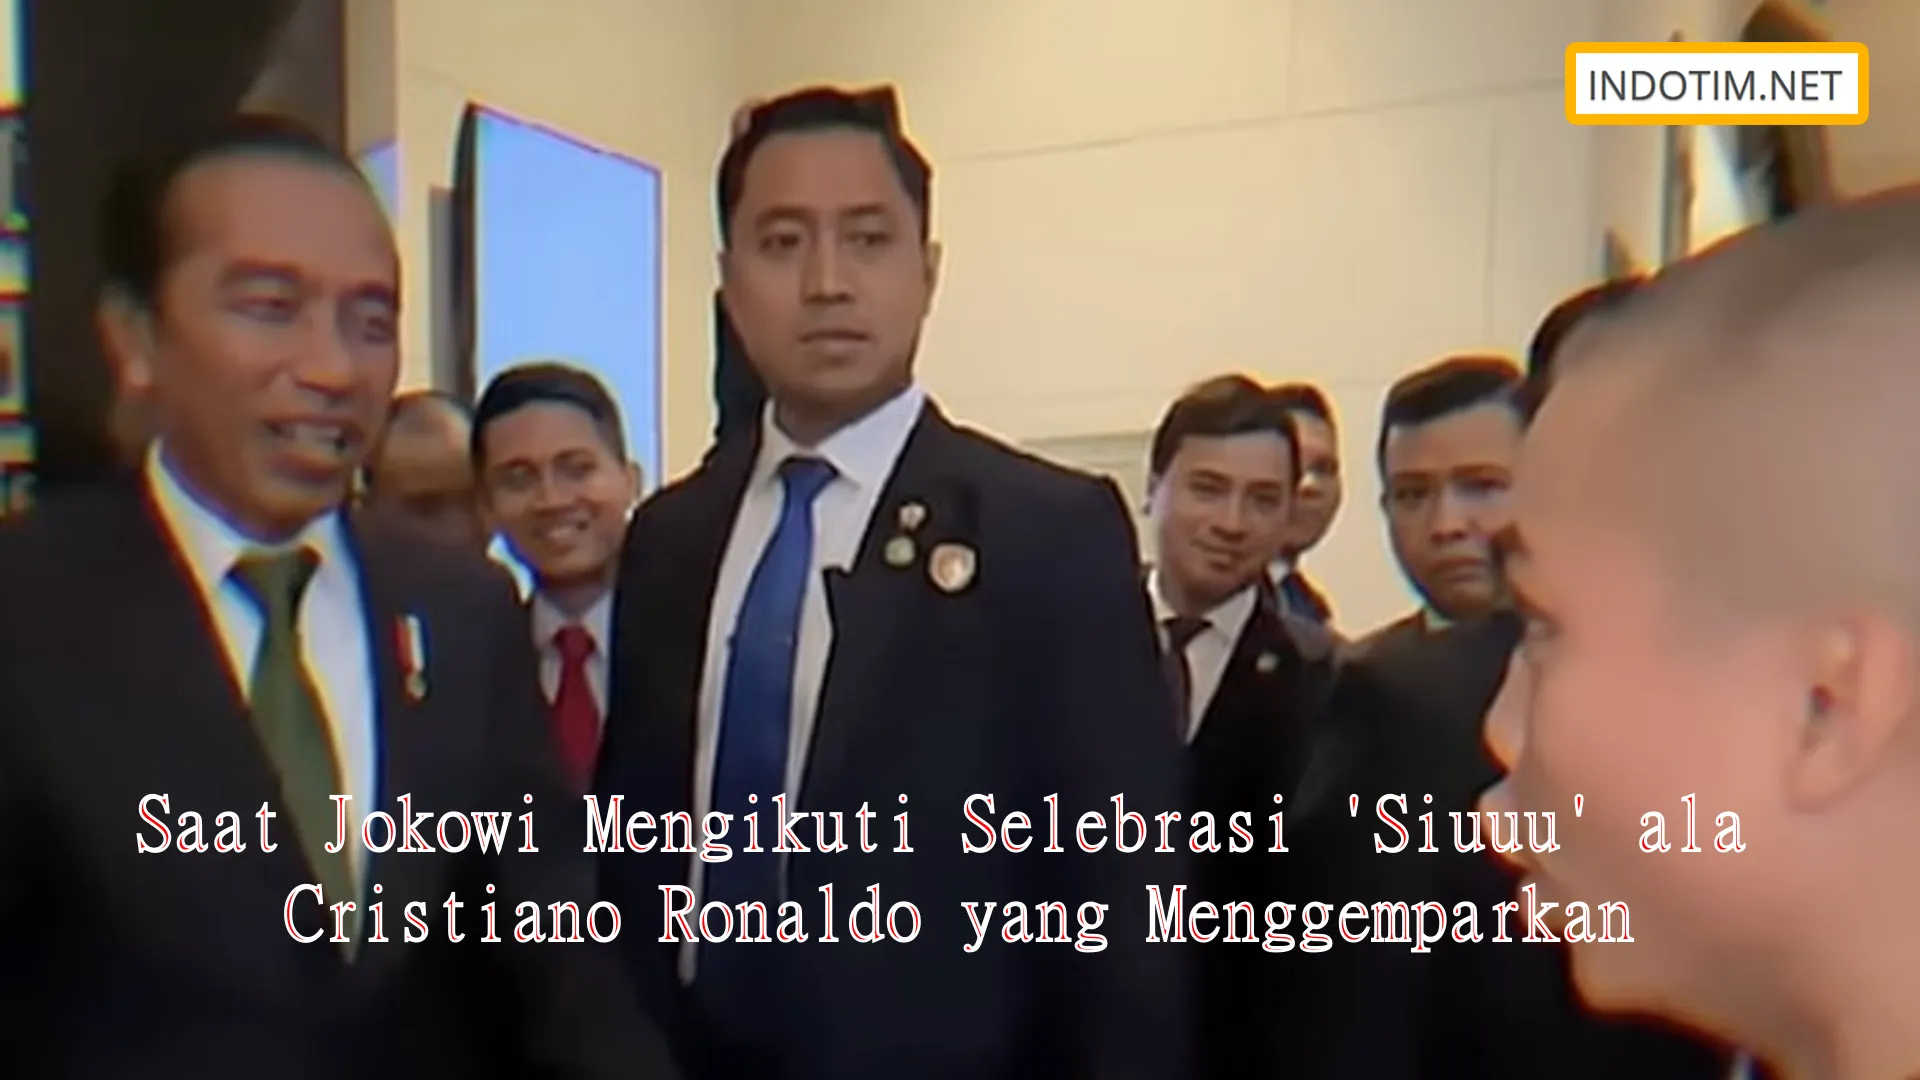 Saat Jokowi Mengikuti Selebrasi 'Siuuu' ala Cristiano Ronaldo yang Menggemparkan